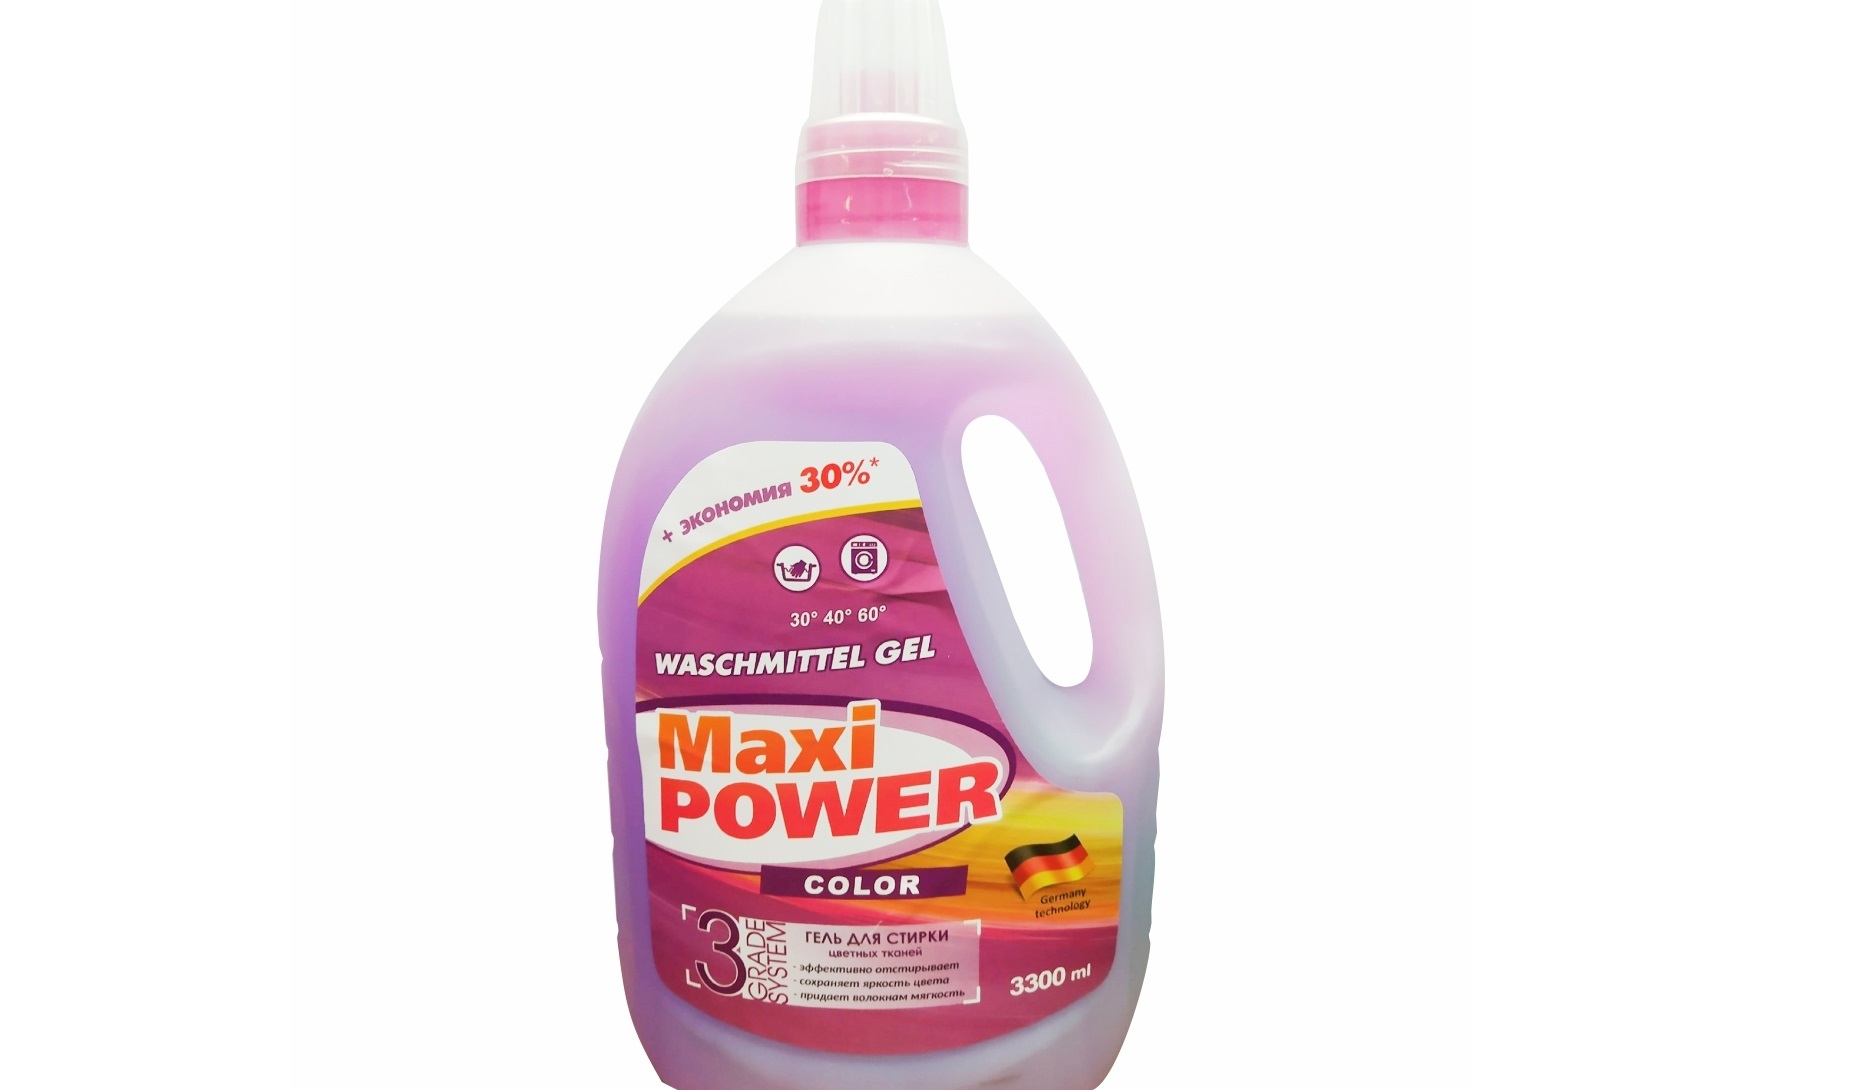 Maxi Power Color